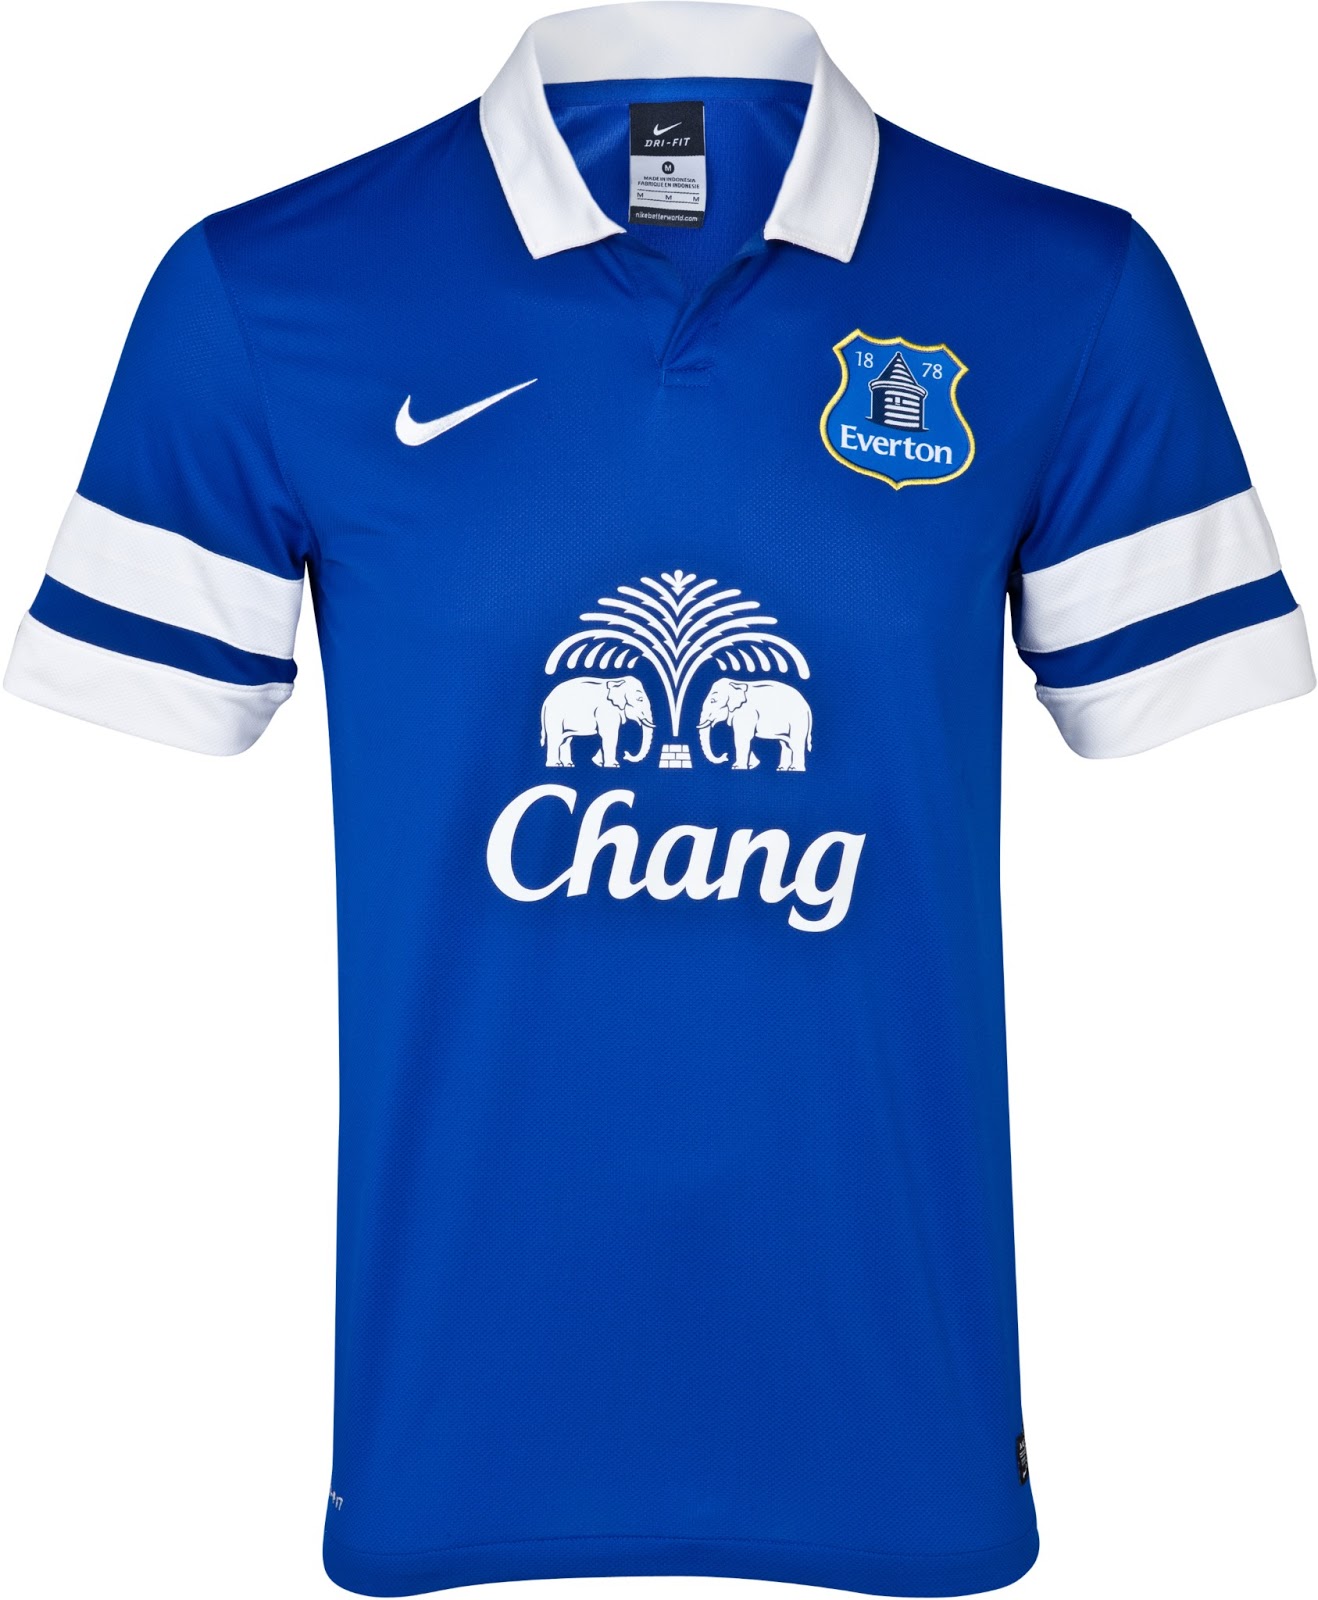 Everton FC thuisshirt 2013-2014